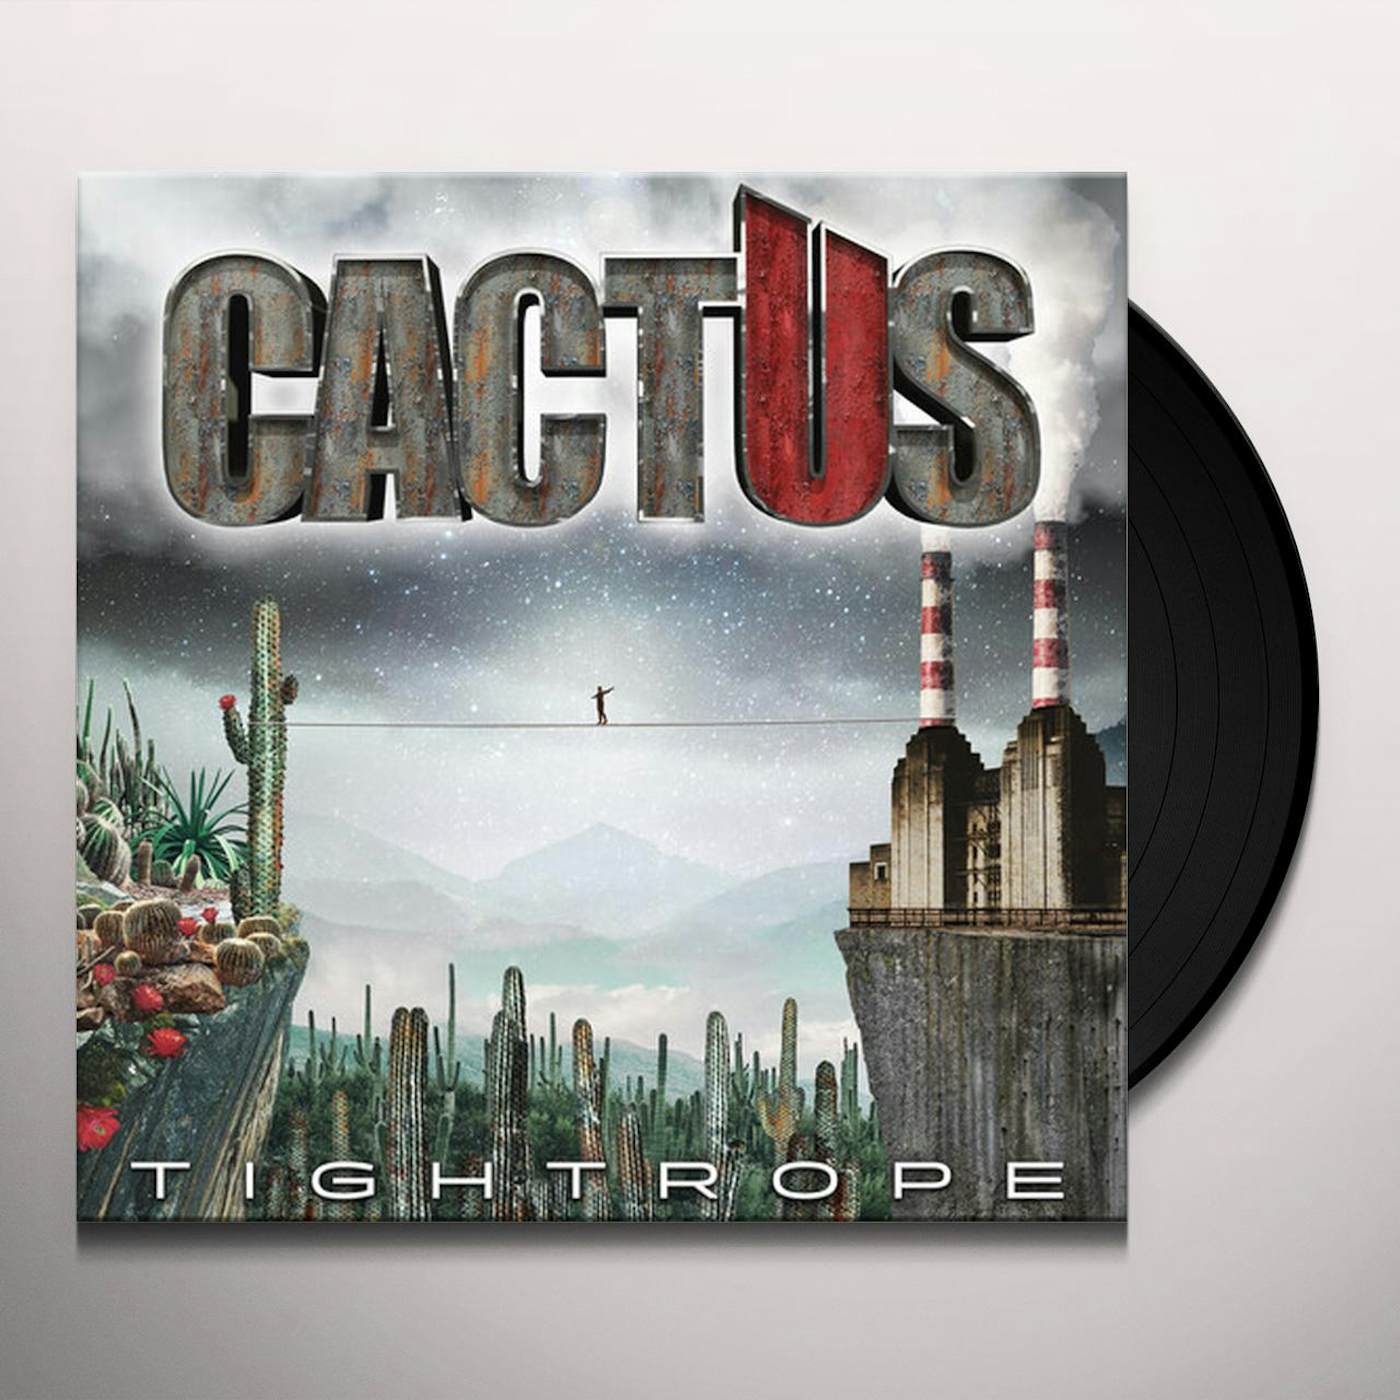 Cactus - Restrictions / ’Ot ‘N’ Sweaty (2 CD - Import)